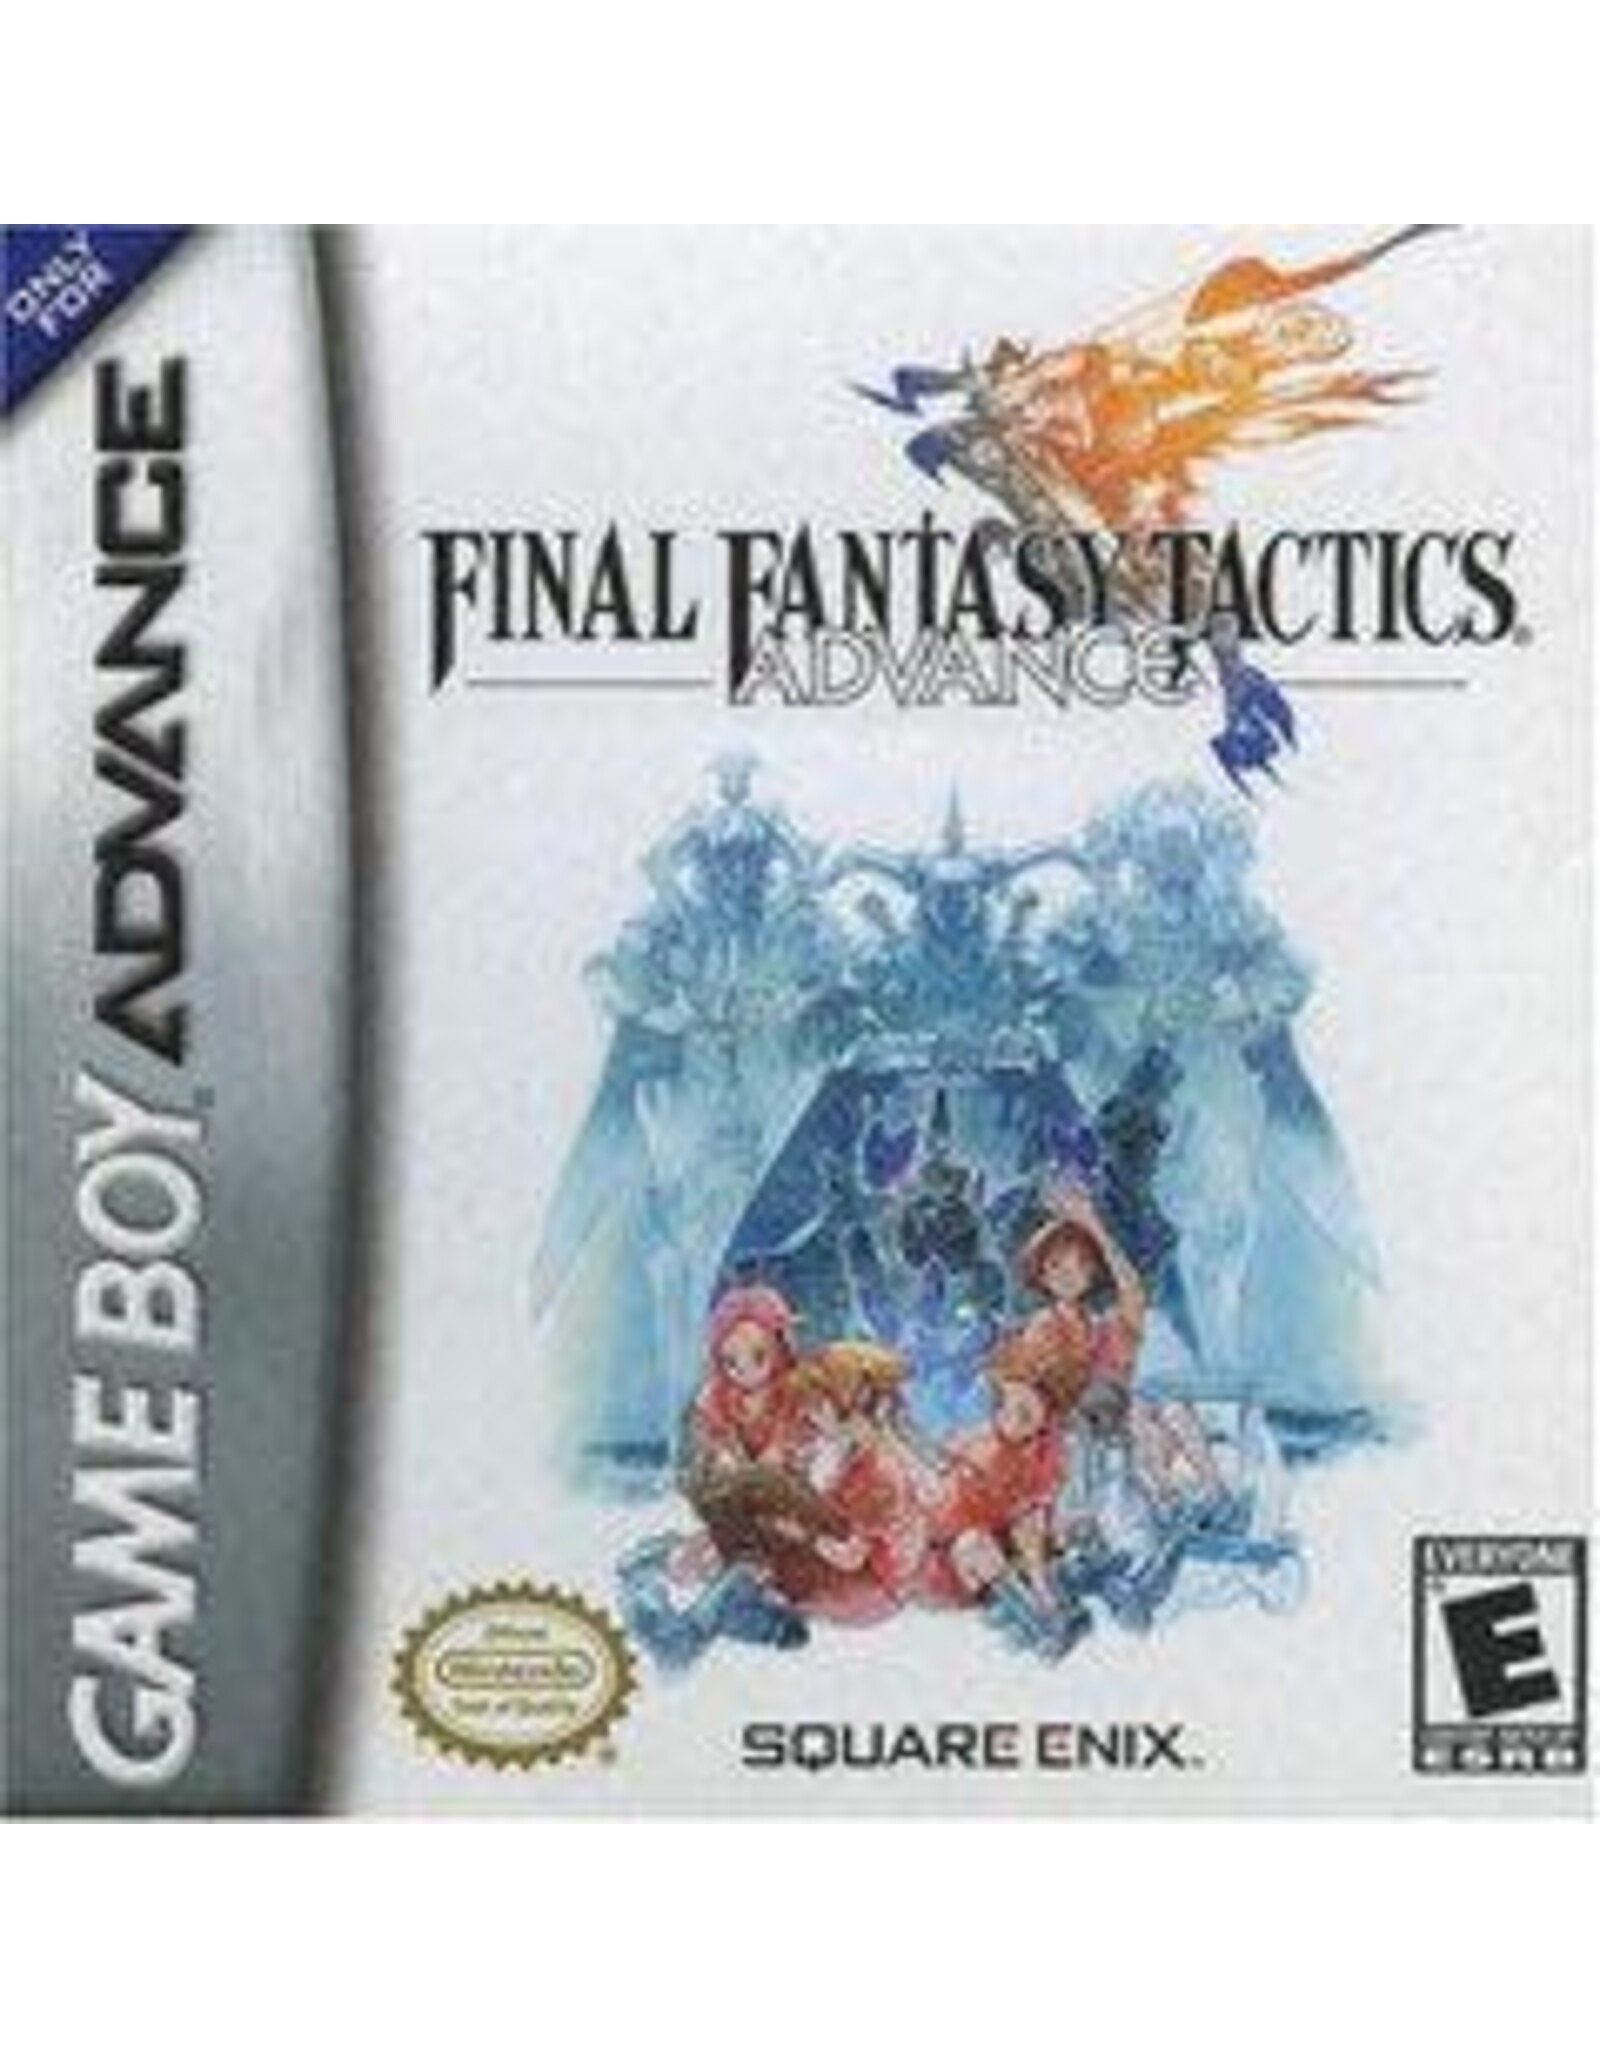 Game Boy Advance Final Fantasy Tactics Advance (Used)